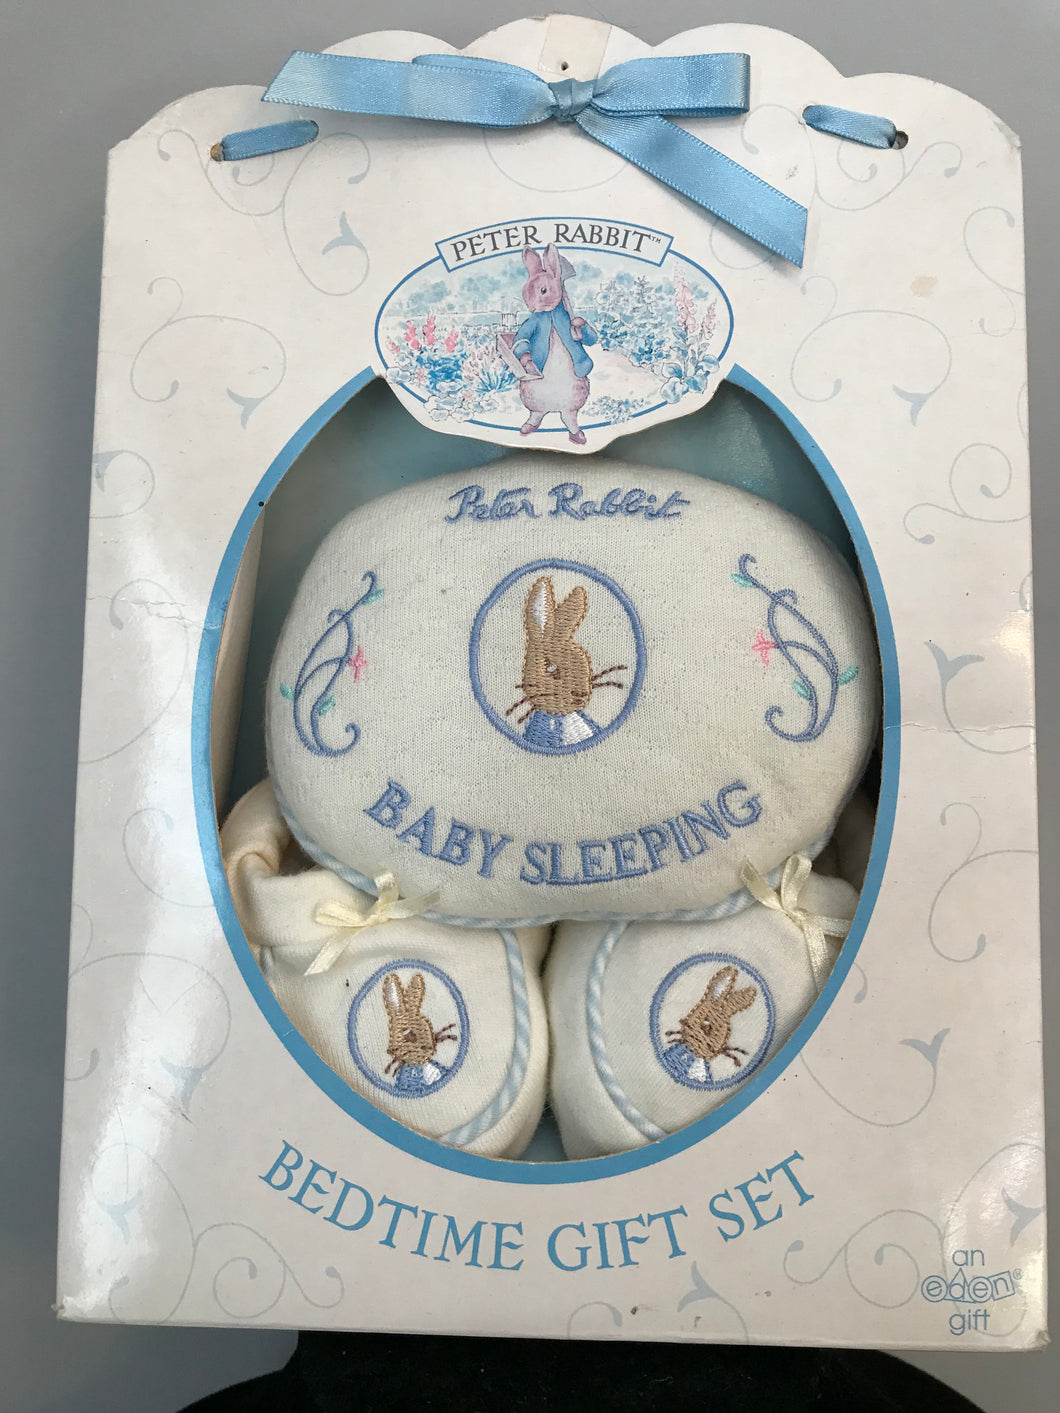 Peter Rabbit, Bedtime Gift Set